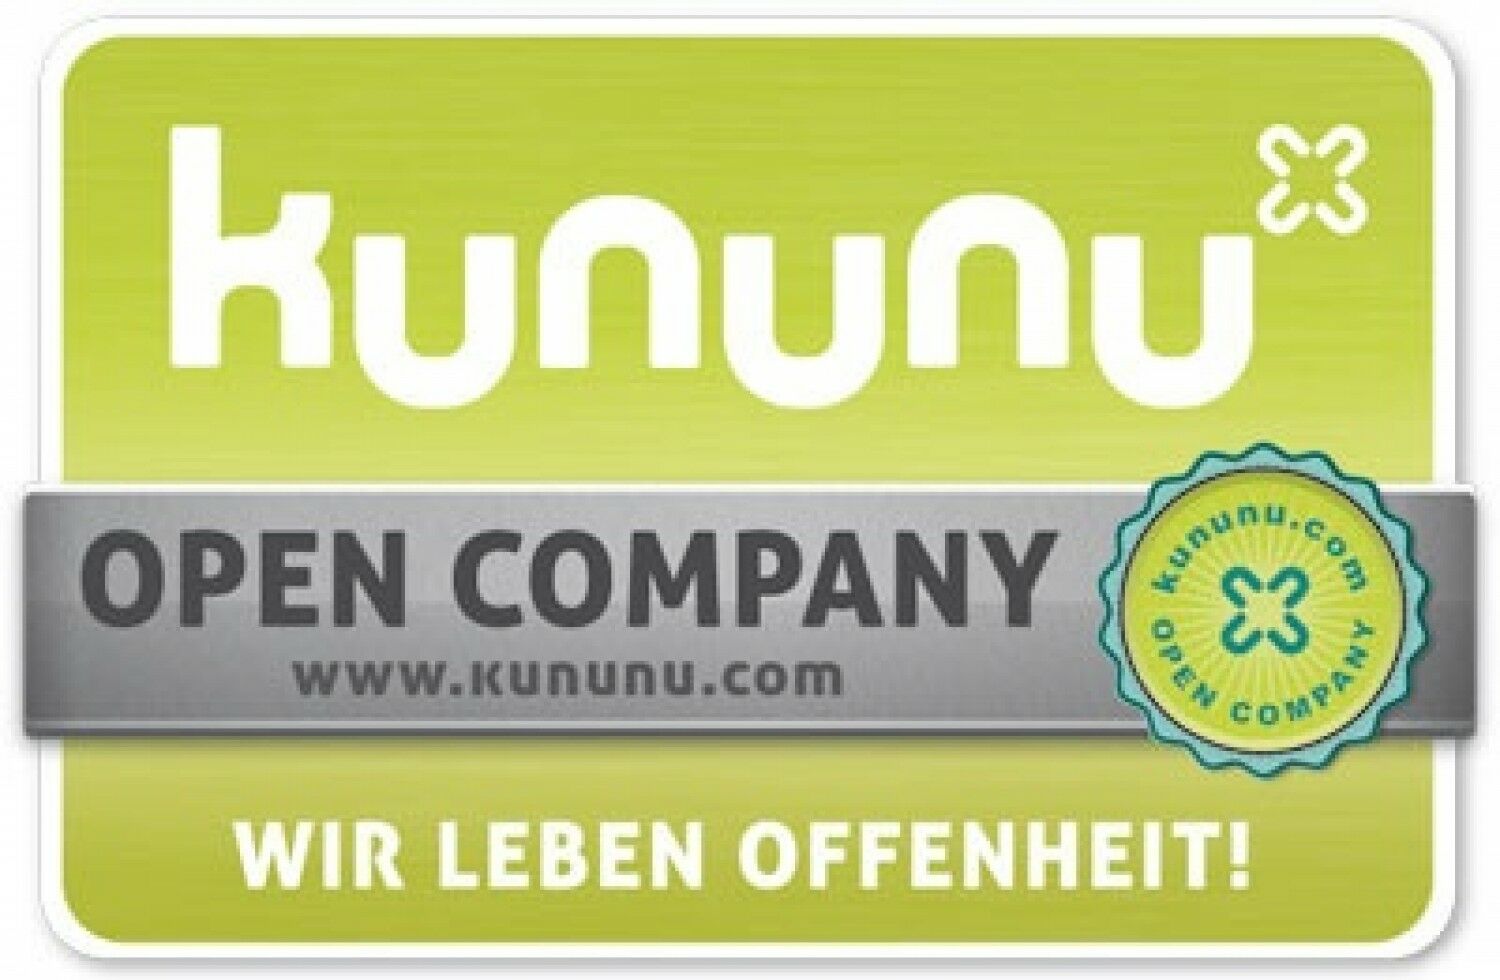 Telelift ist Kununu Open Company